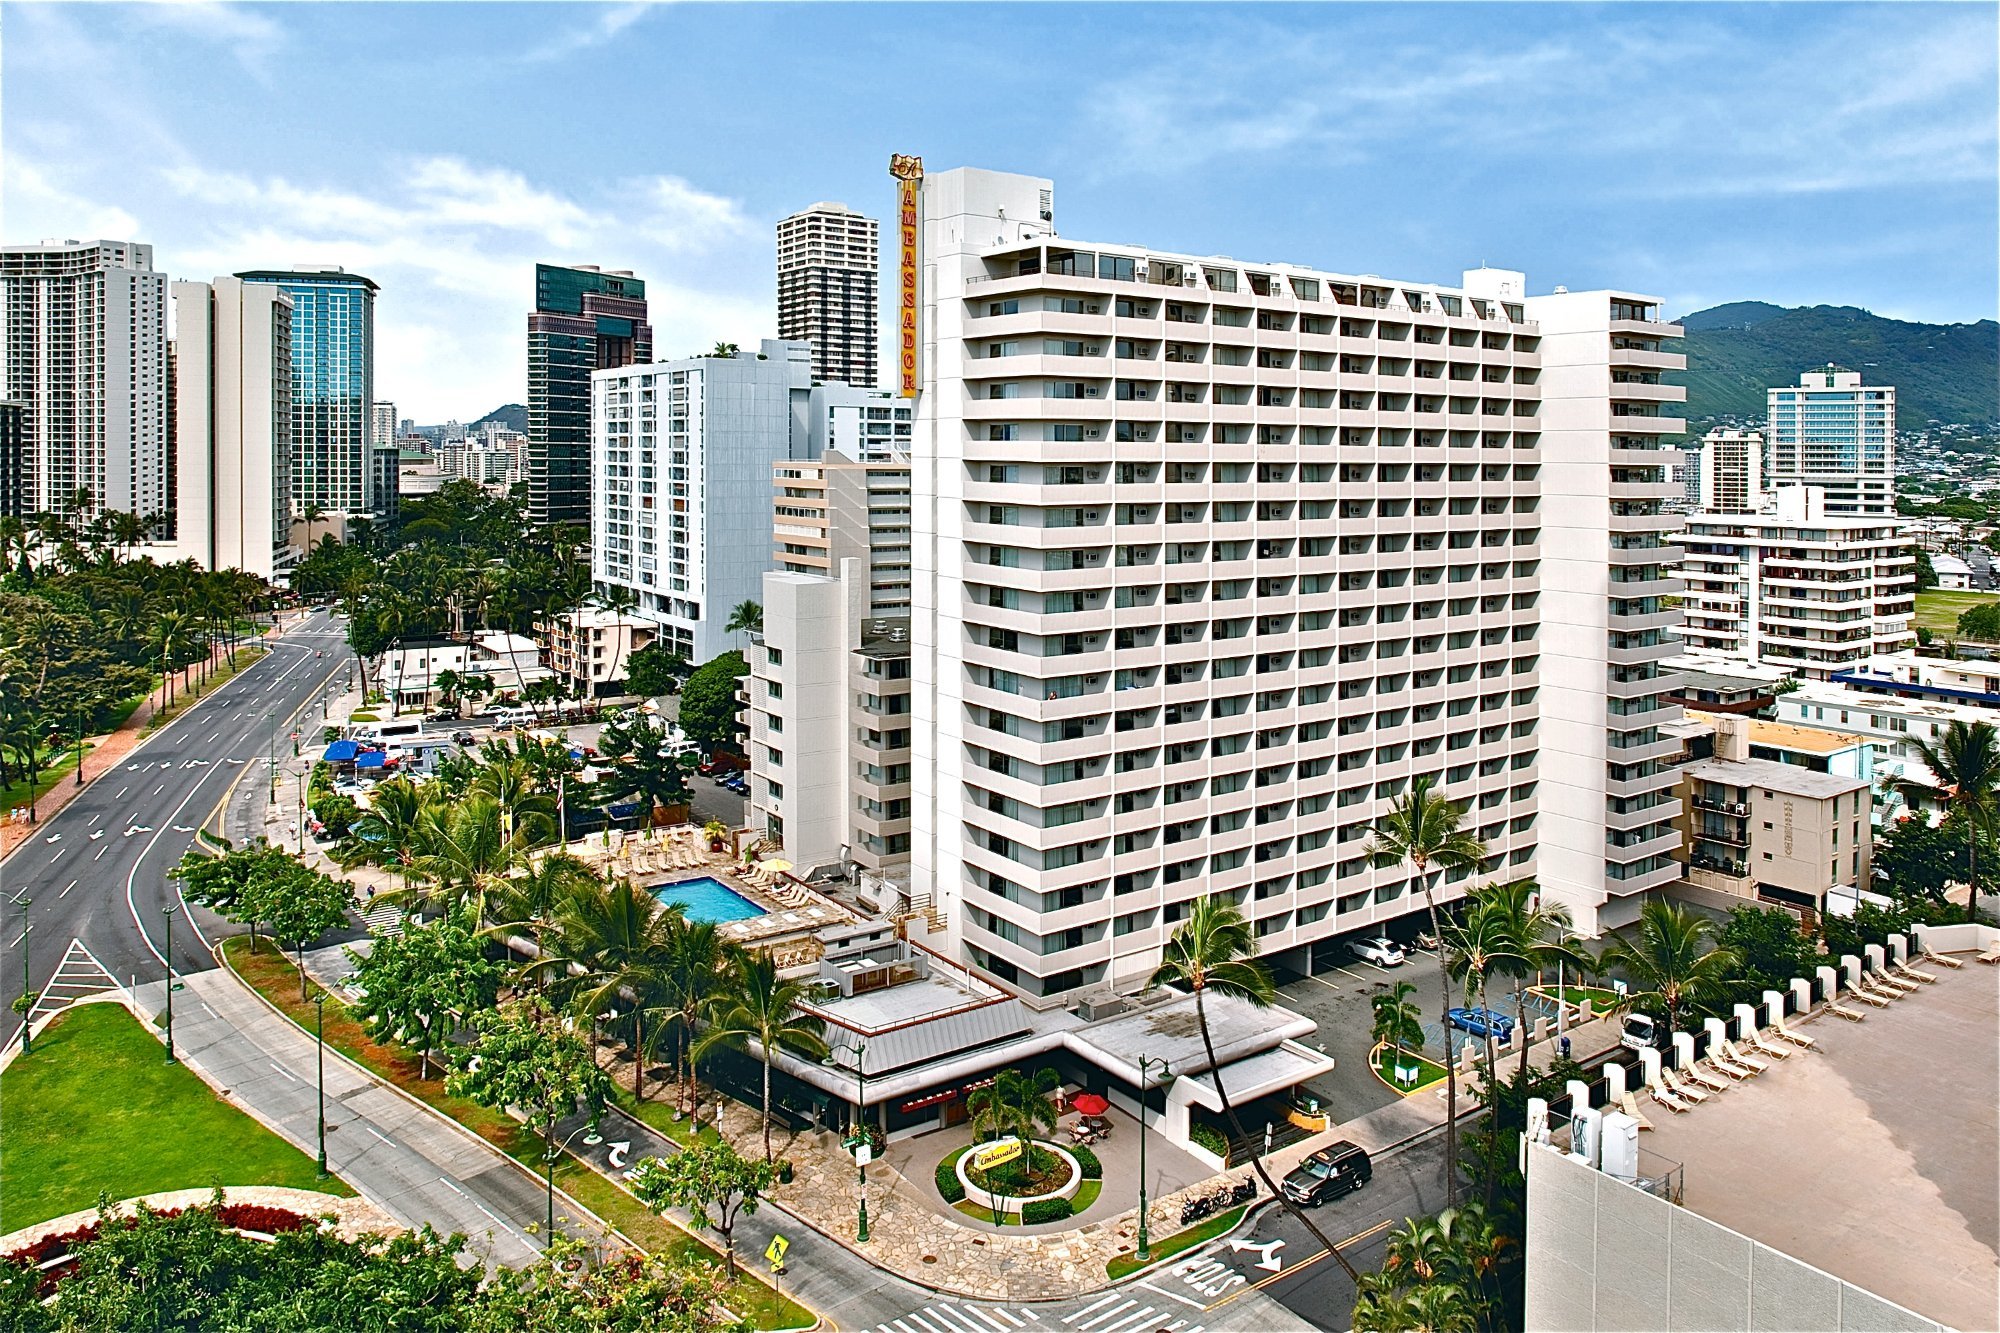 Photo of Ambassador Hotel Waikiki, Honolulu, HI